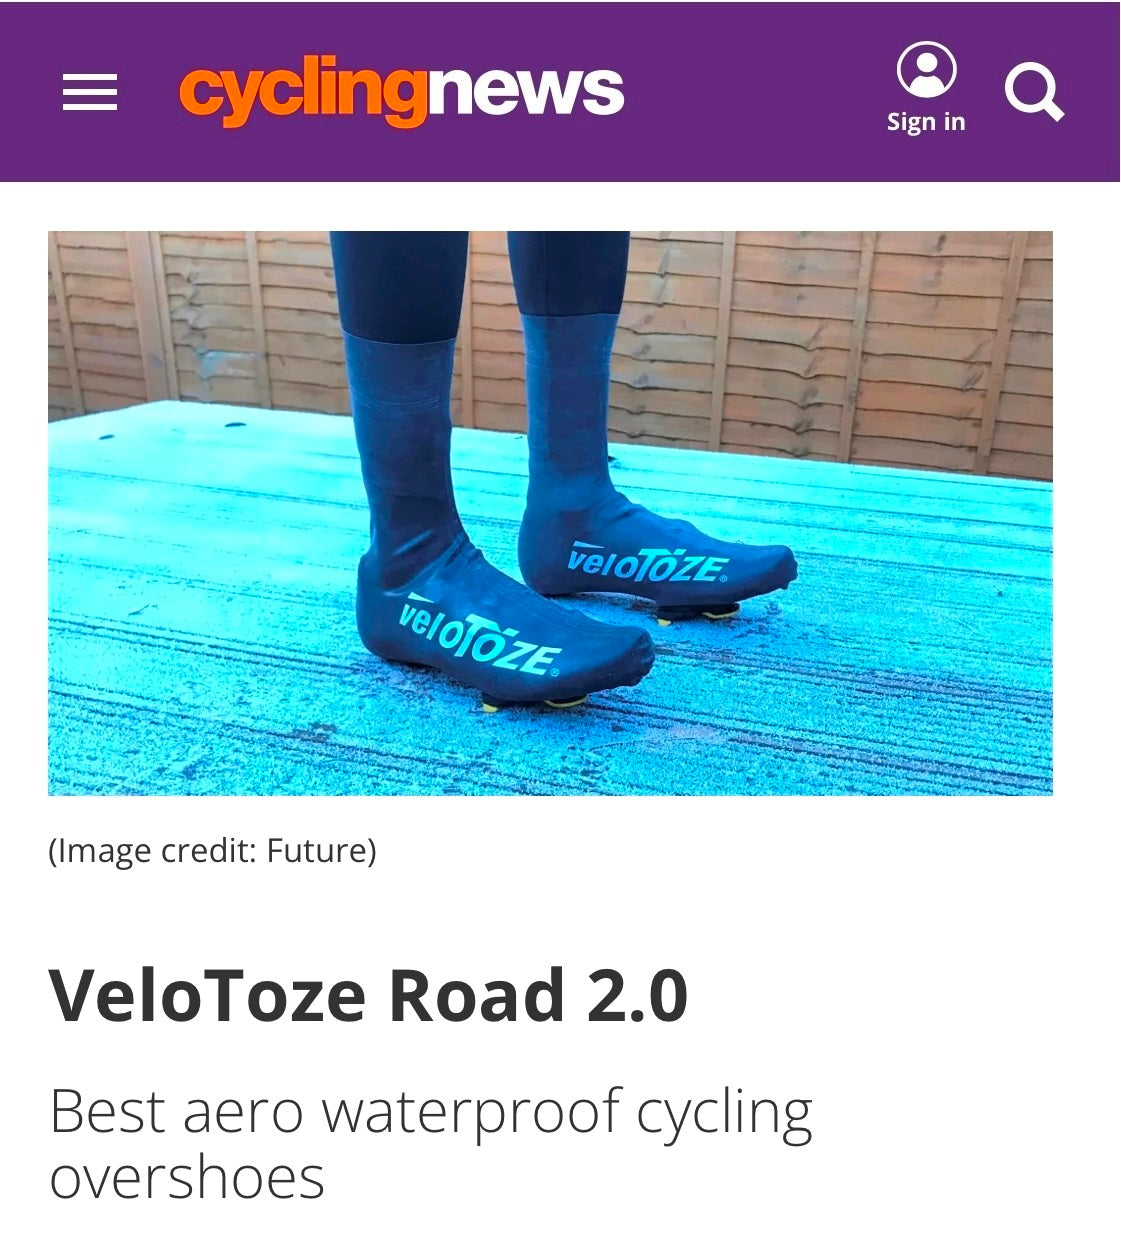 Cyclingnews picks veloToze Road 2.0 as Best aero waterproof cycling overshoes